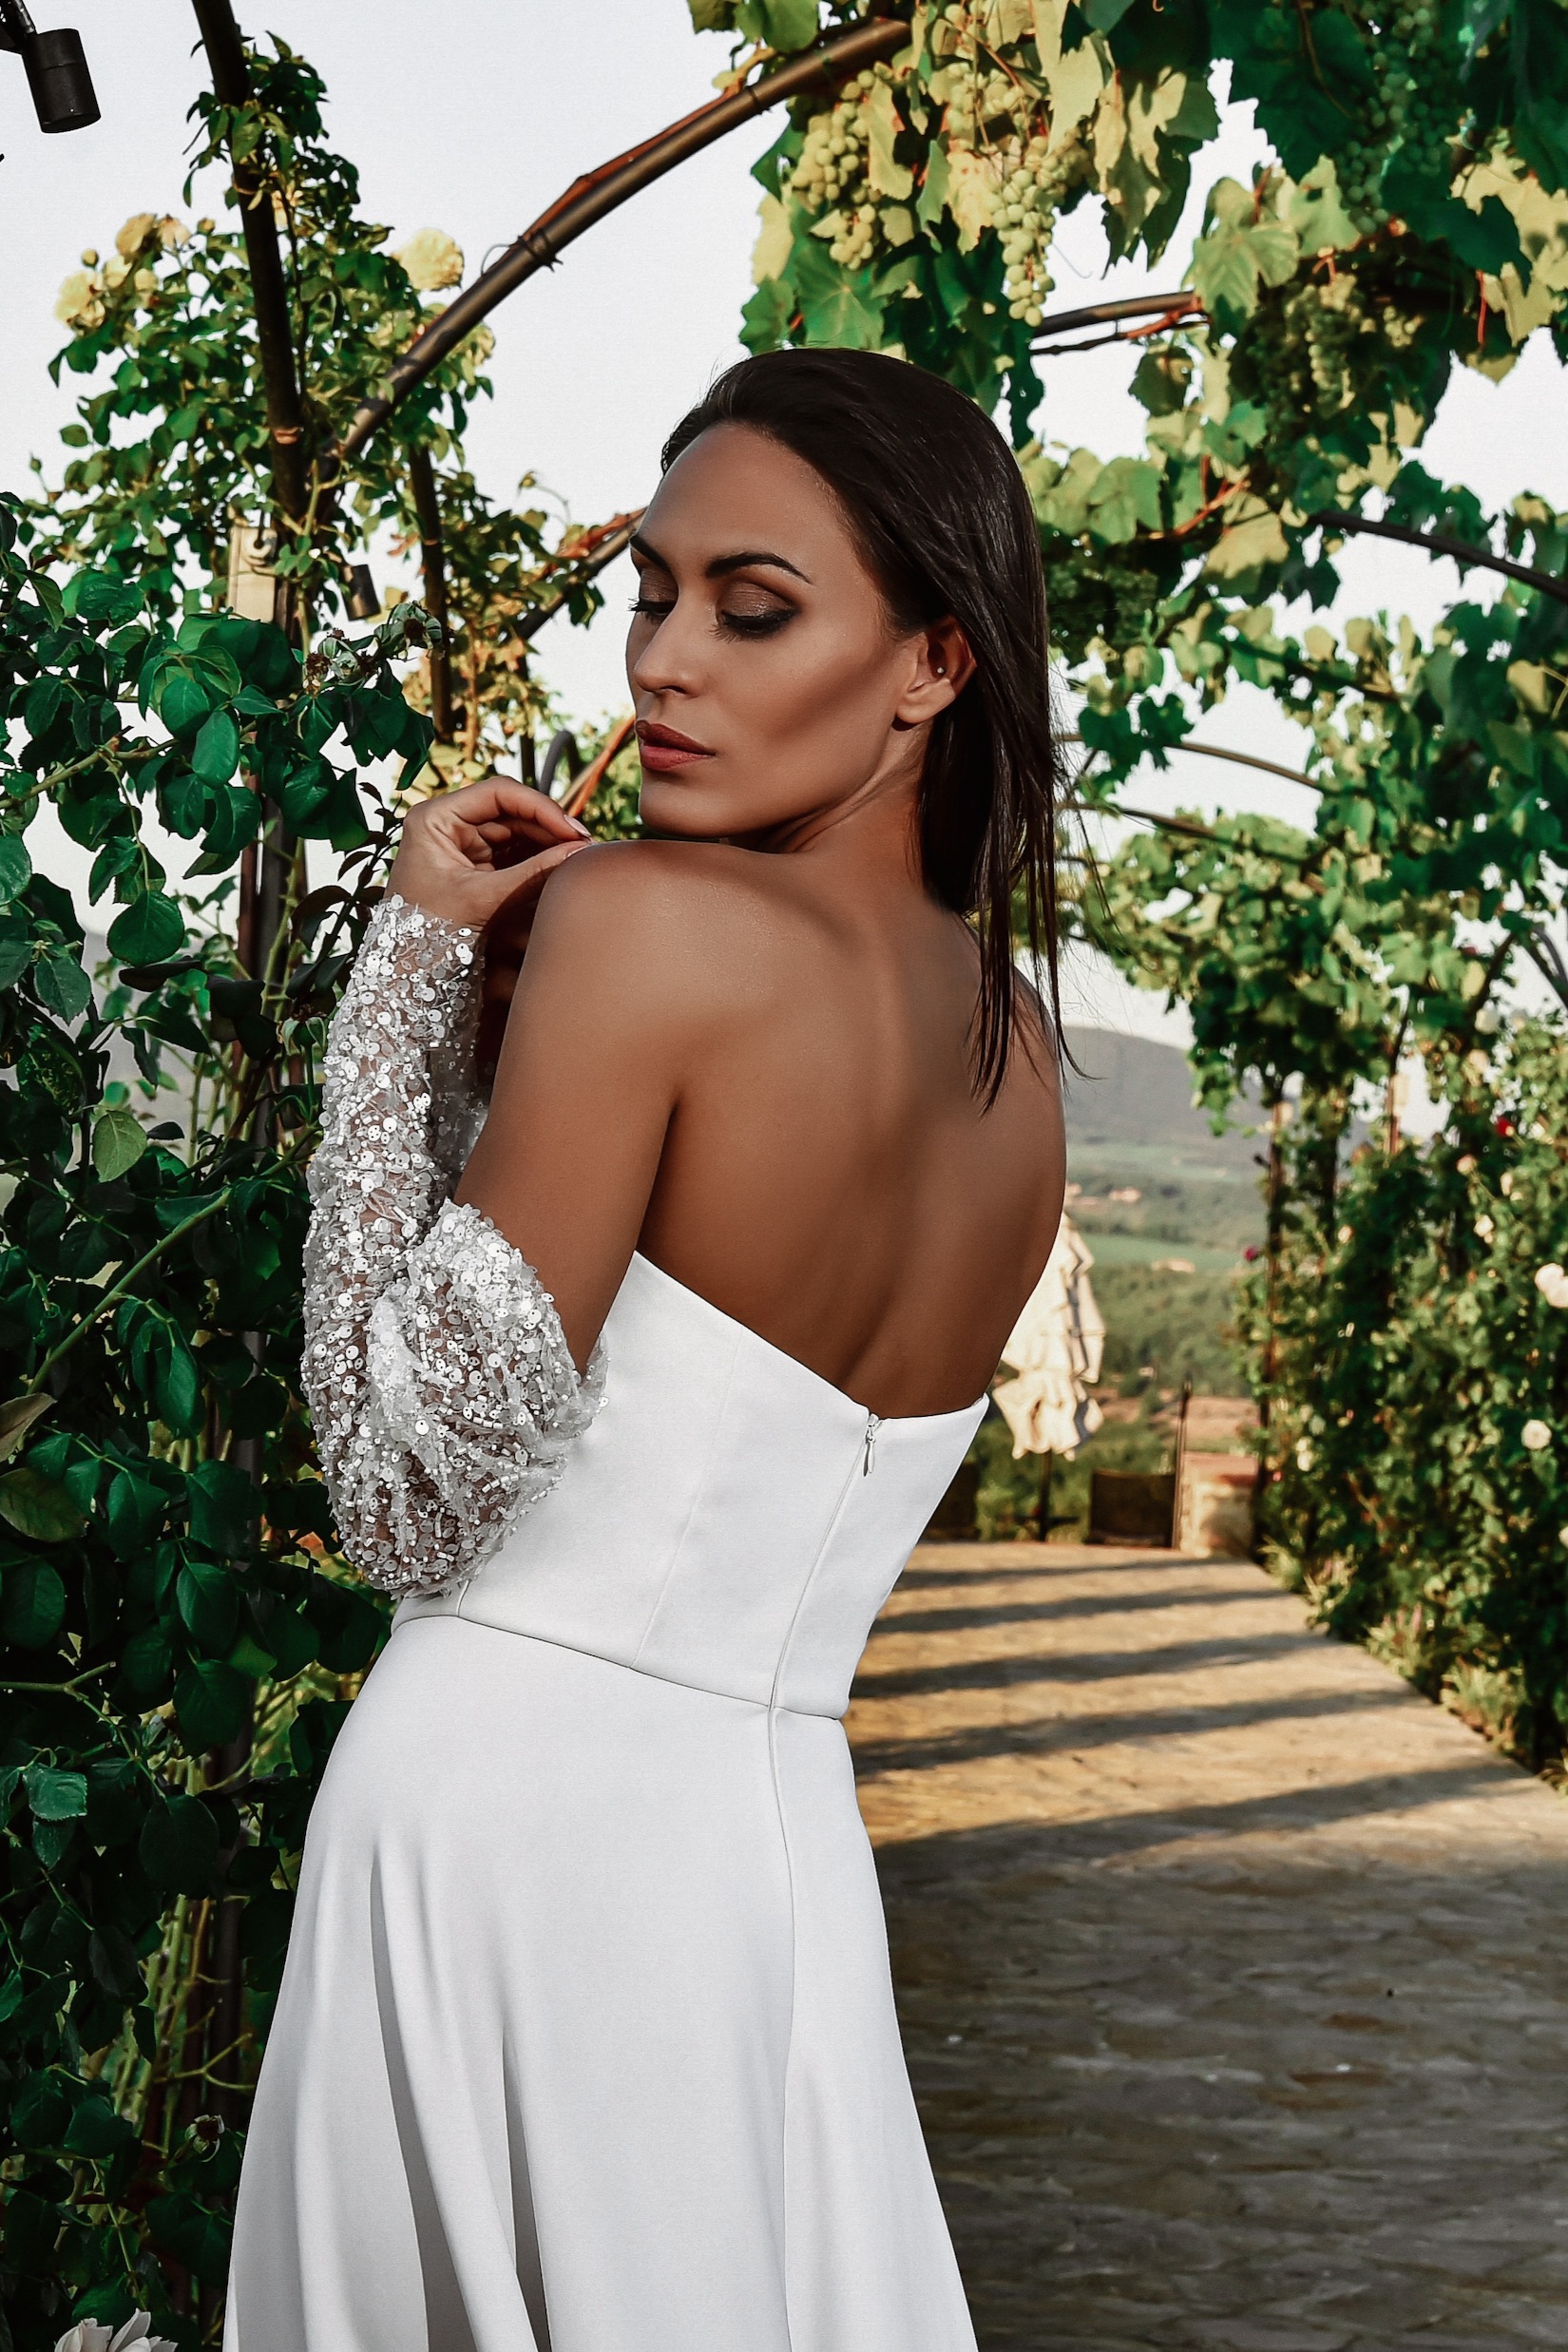 ORSOYA Bridal Dress: Strapless minimal bridal dress with detachable sleeves.